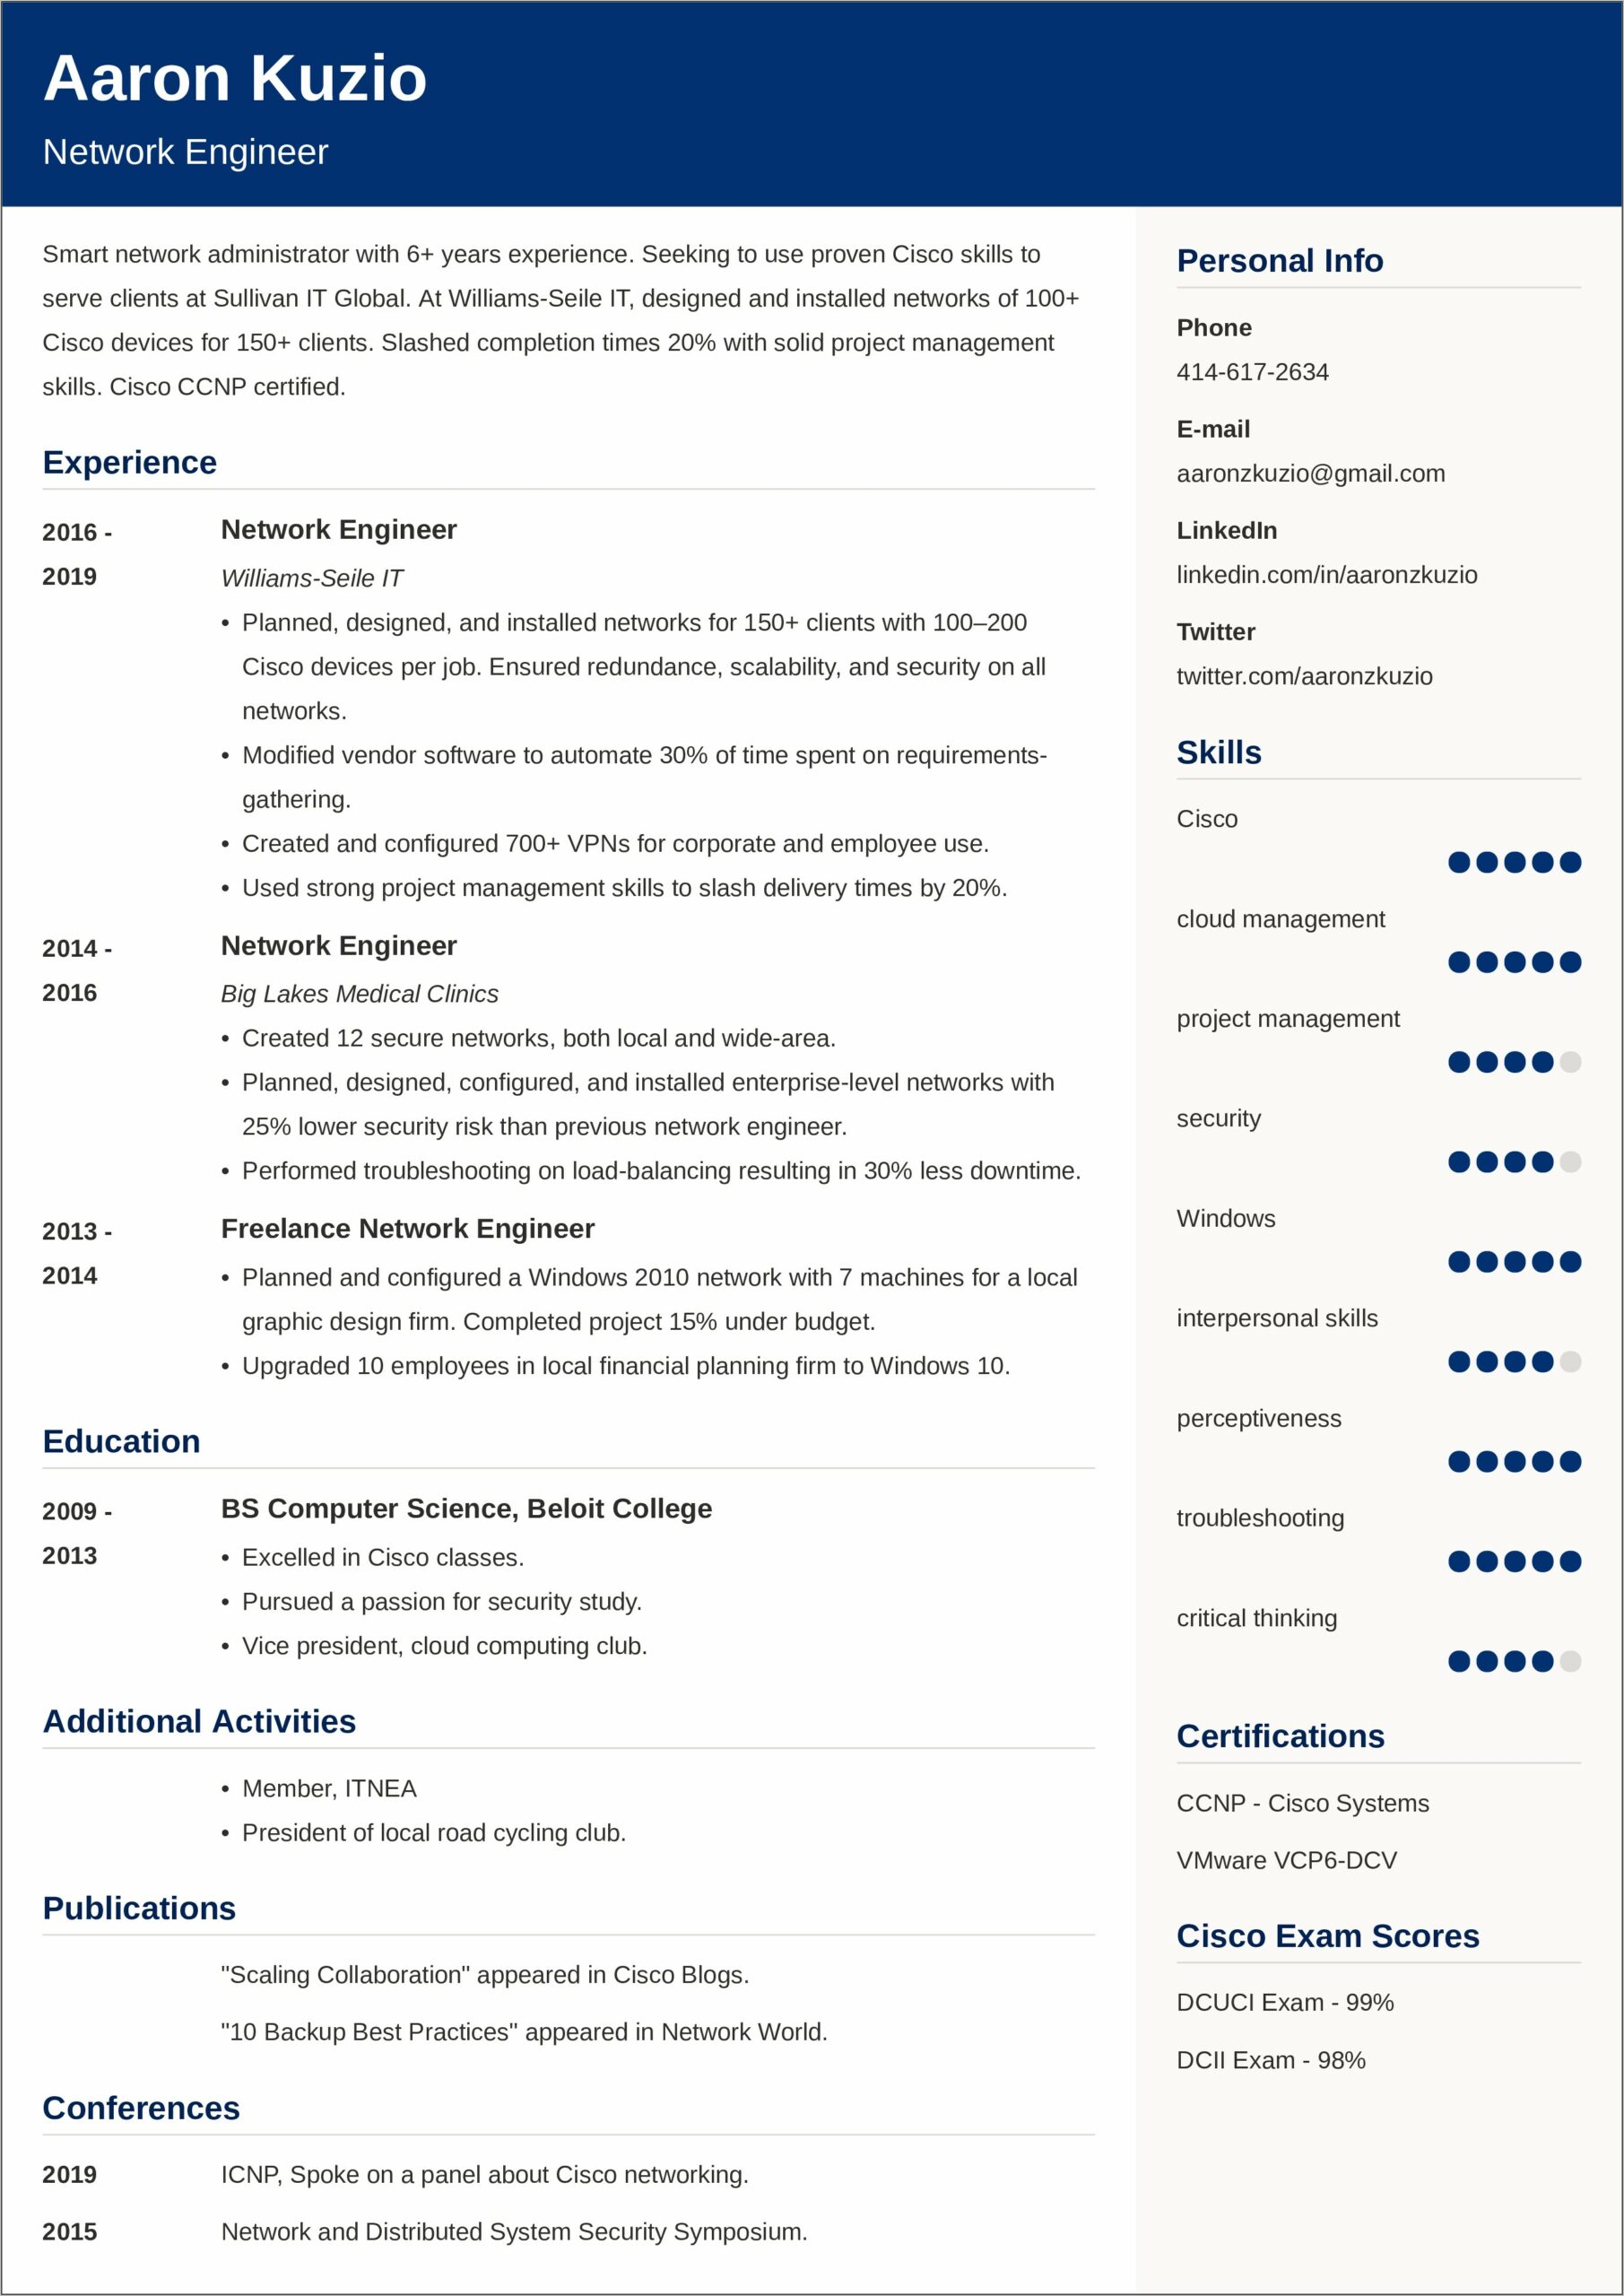 Is Google Analytics Certification Good For Resume